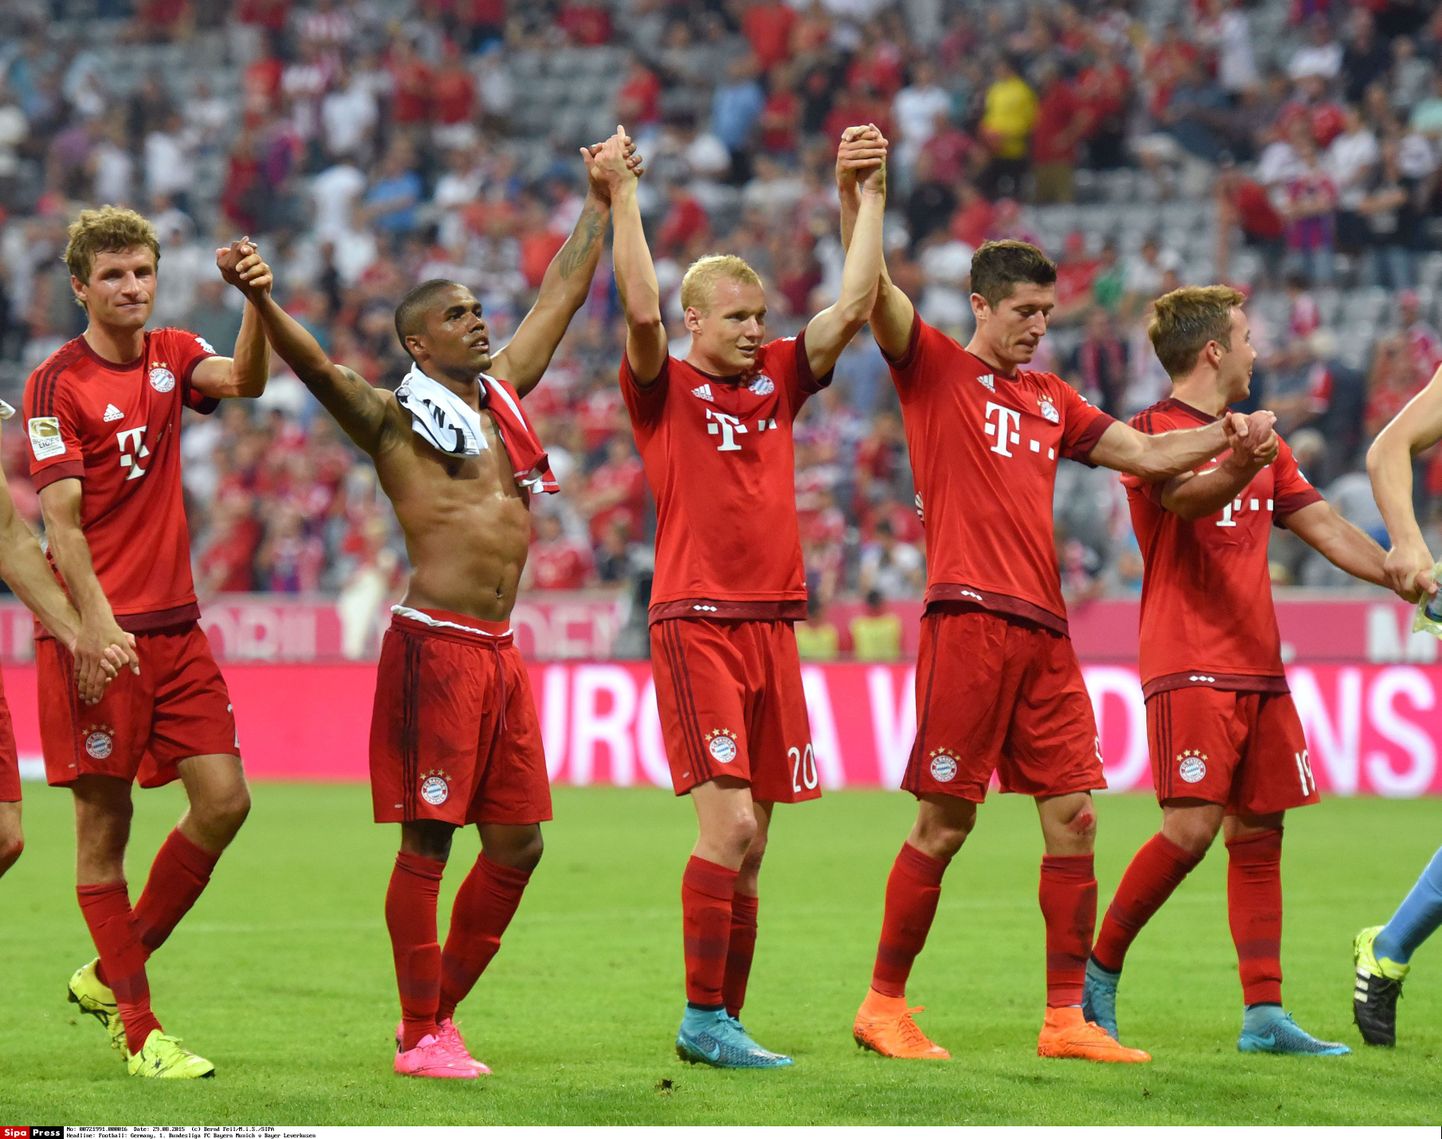 Pildil Müncheni Bayern mängijad Thomas Müller, Douglas Costa, Sebastian Rode, Robert Lewandowski ja Mario Götze